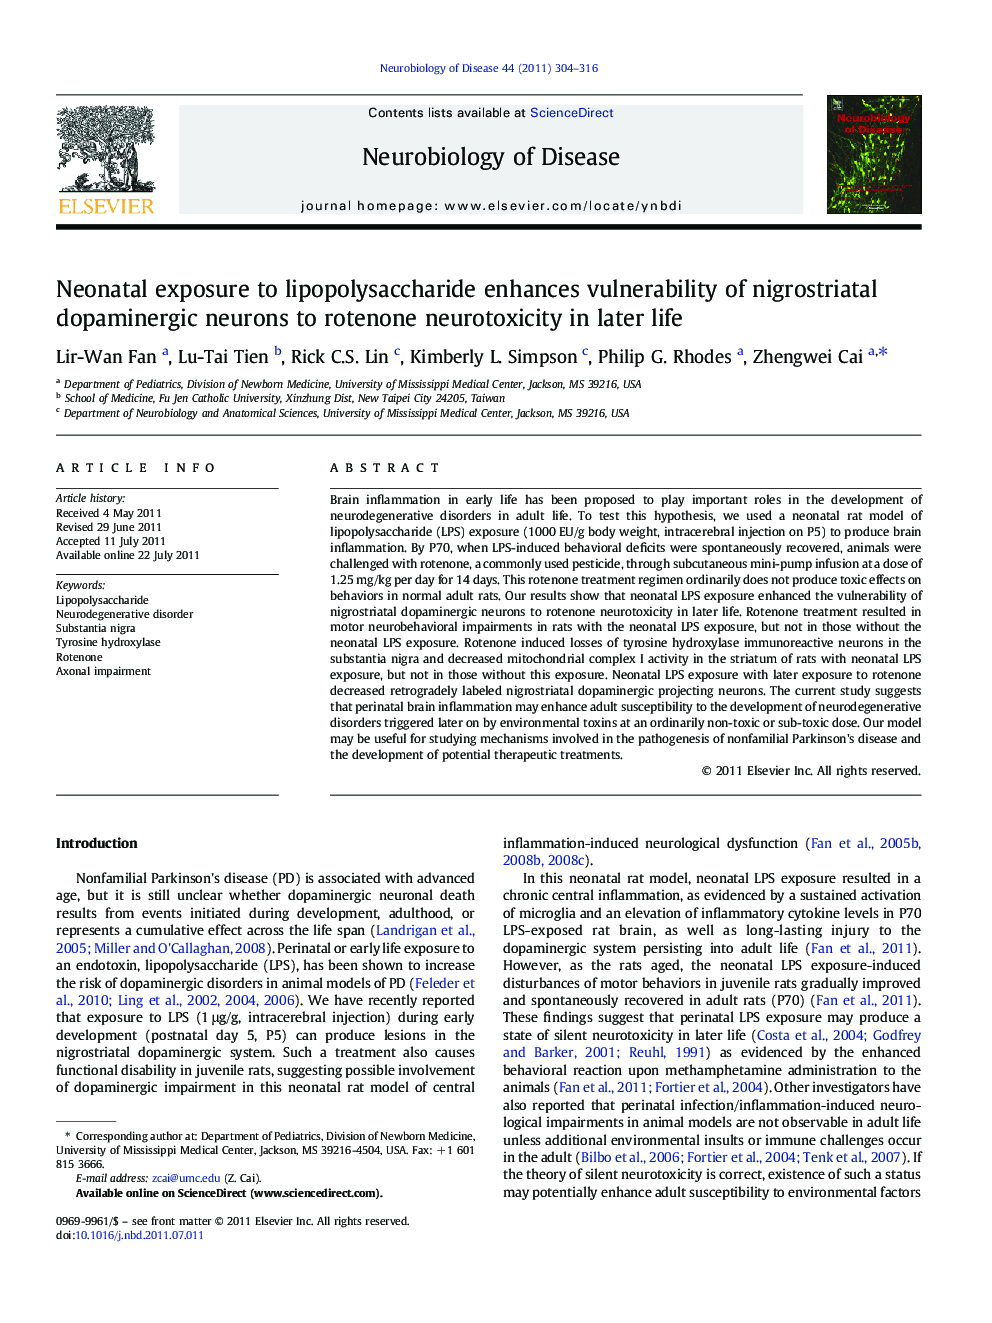 Neonatal exposure to lipopolysaccharide enhances vulnerability of nigrostriatal dopaminergic neurons to rotenone neurotoxicity in later life